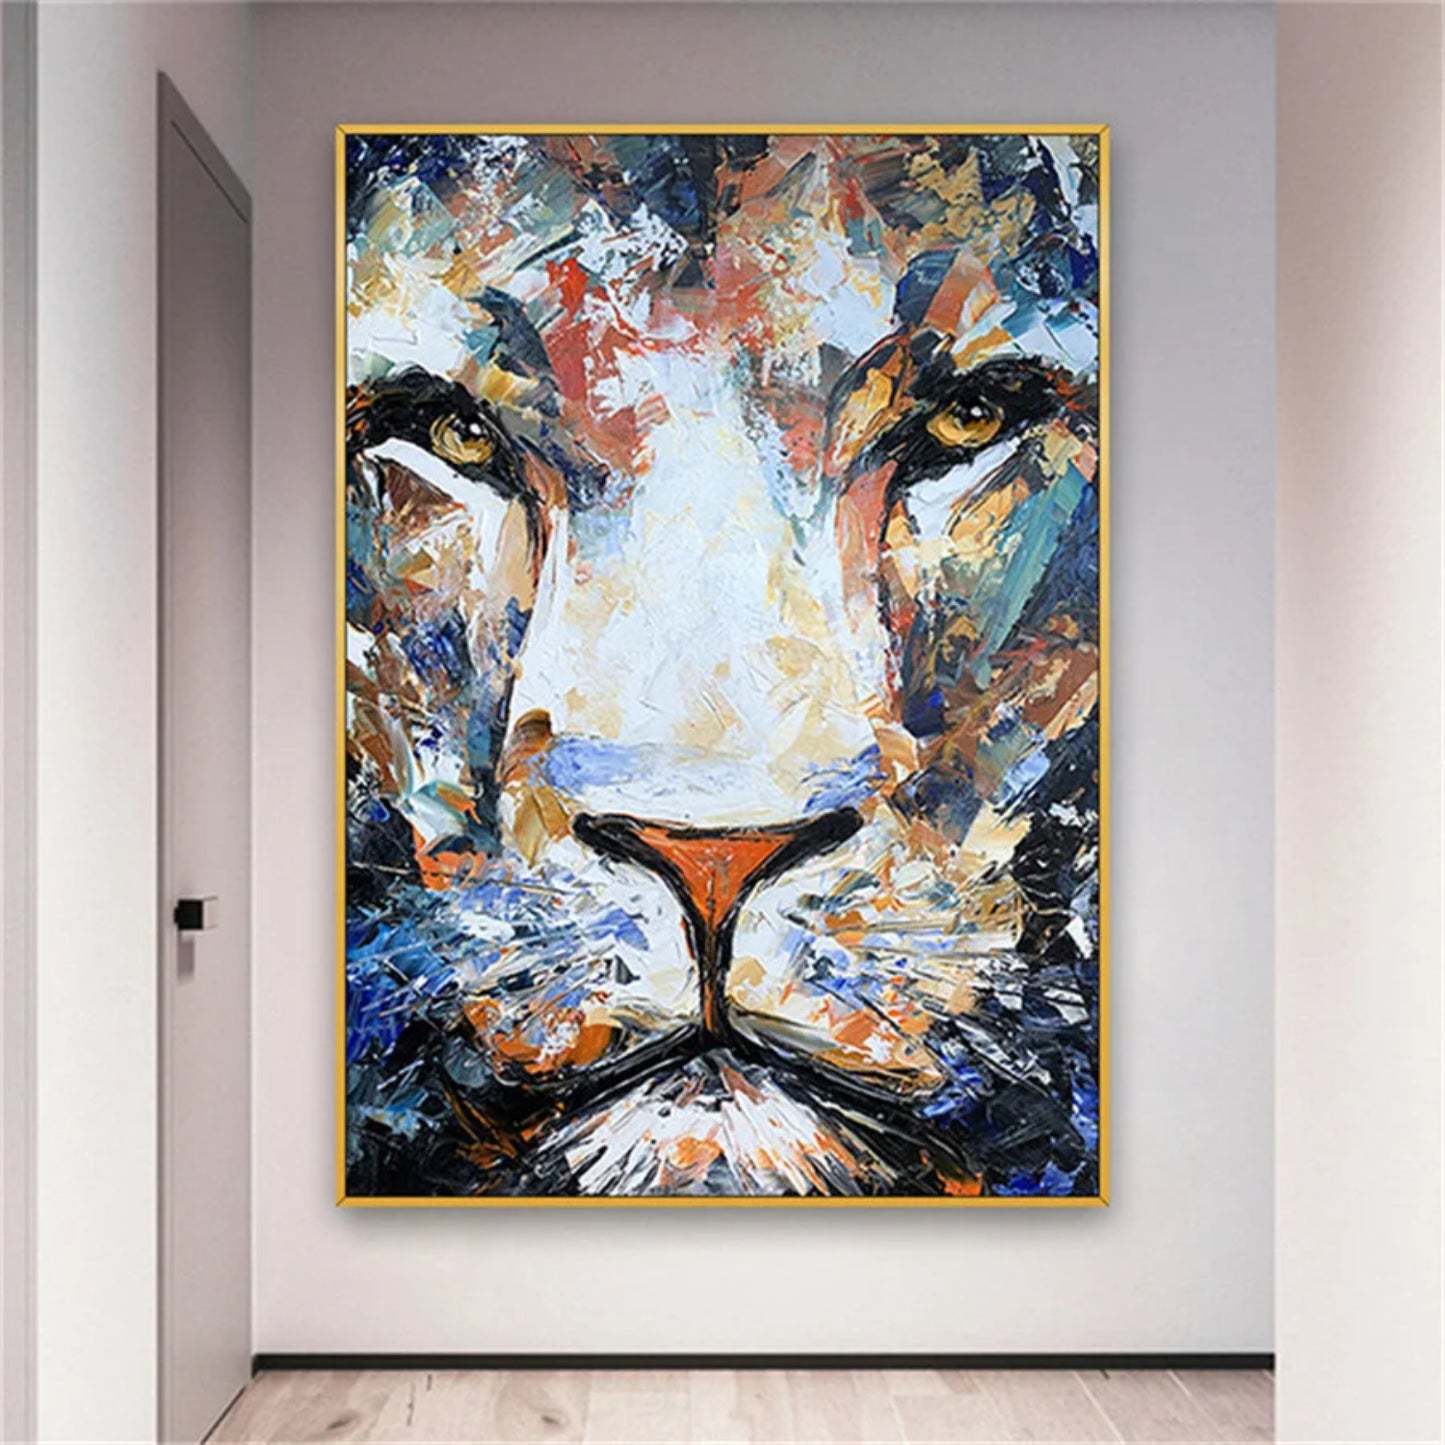 Colourful Lion Graffiti Art with Diamond Texture